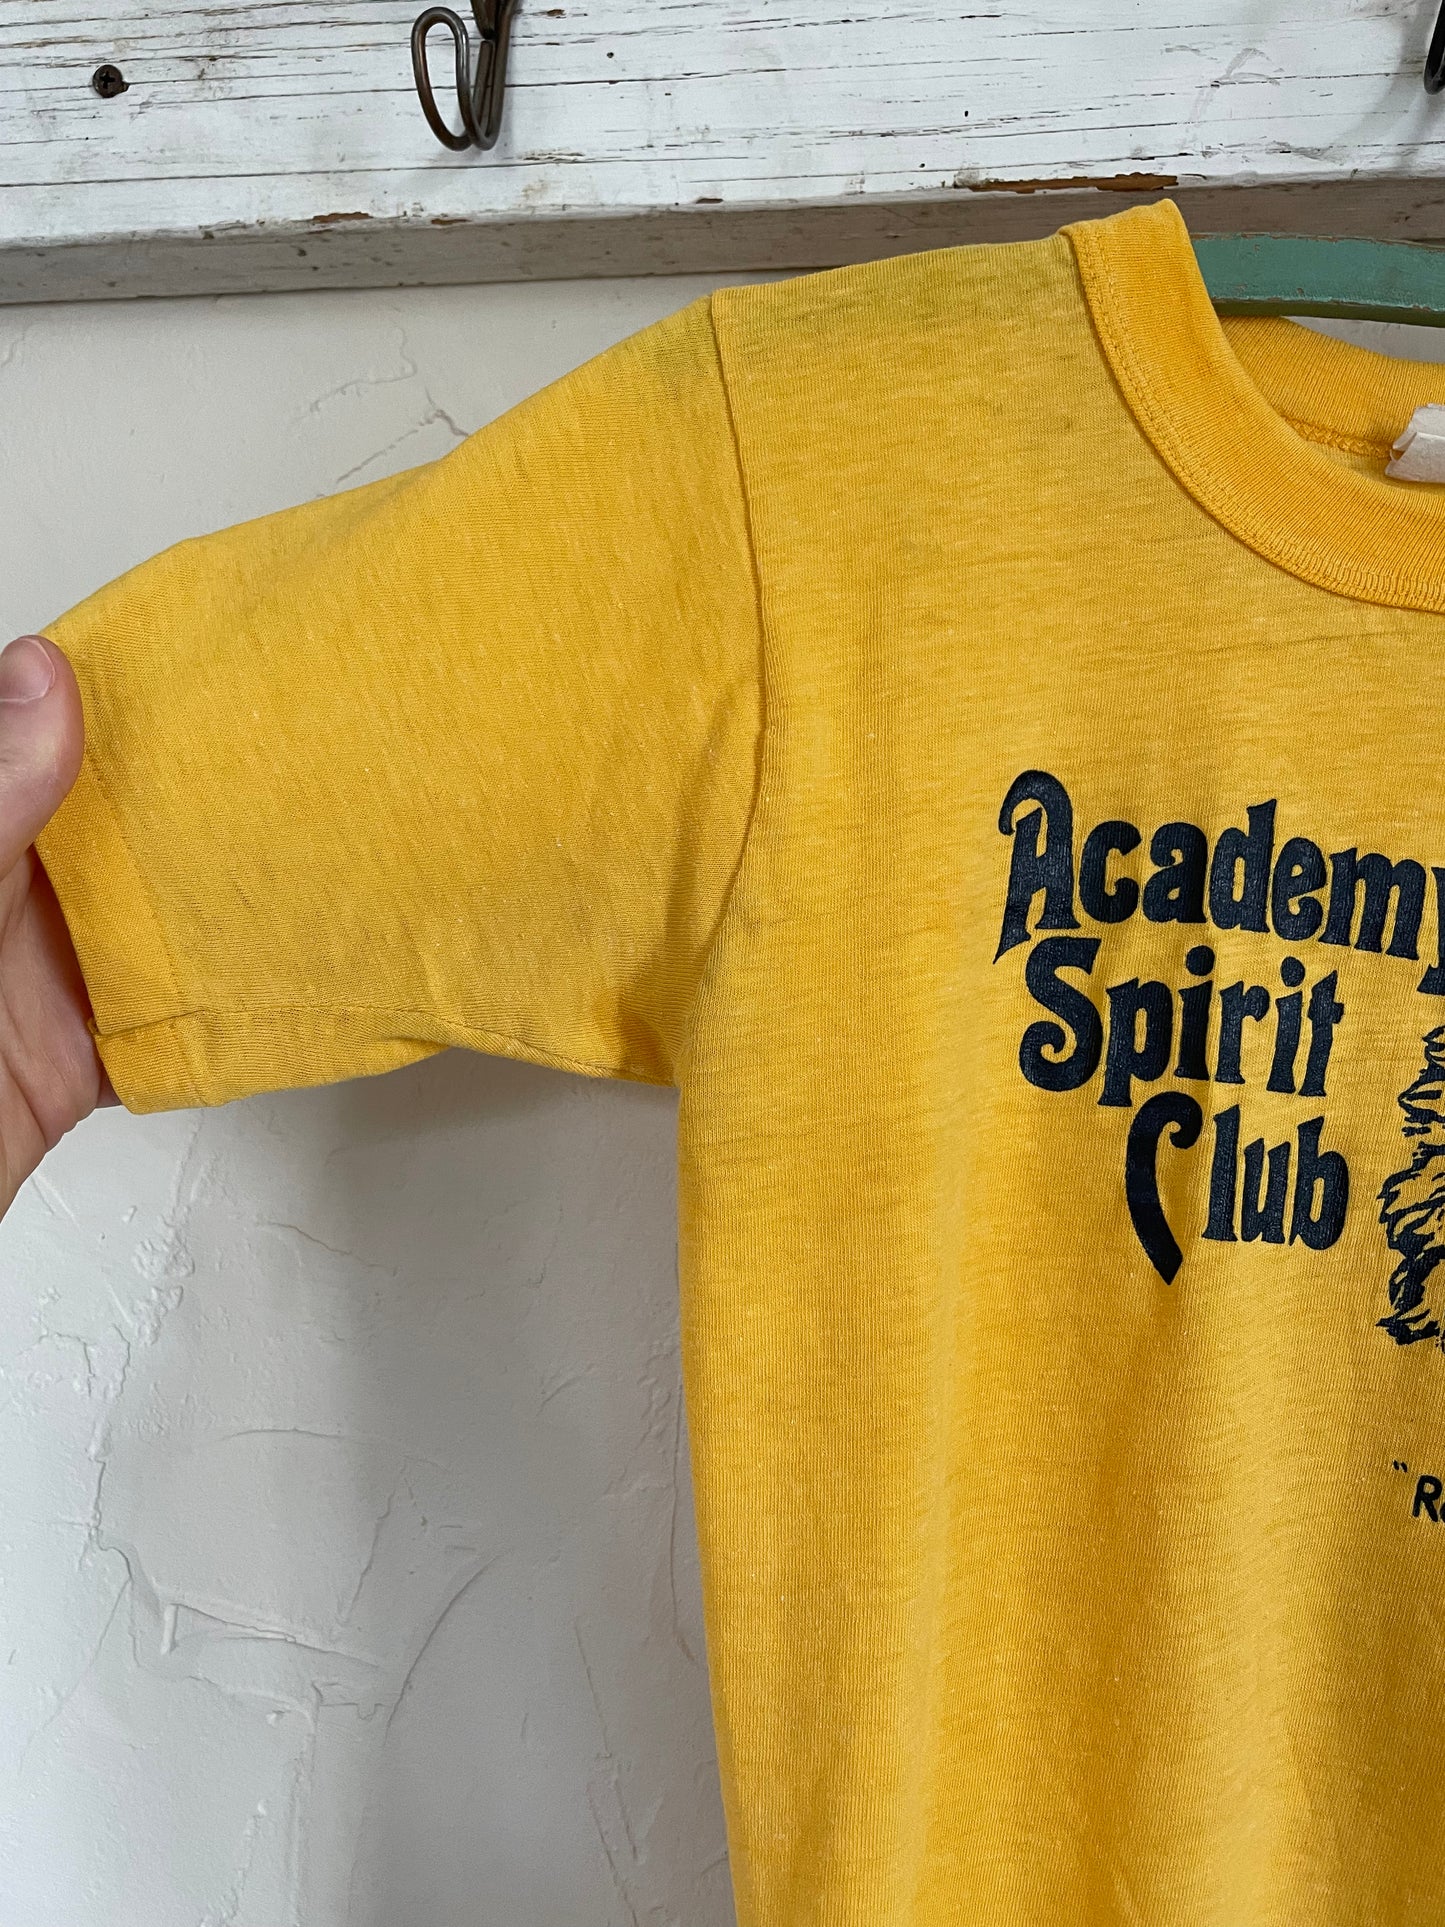 70s Academy Spirit Club “Raise A Little Hell” Tee